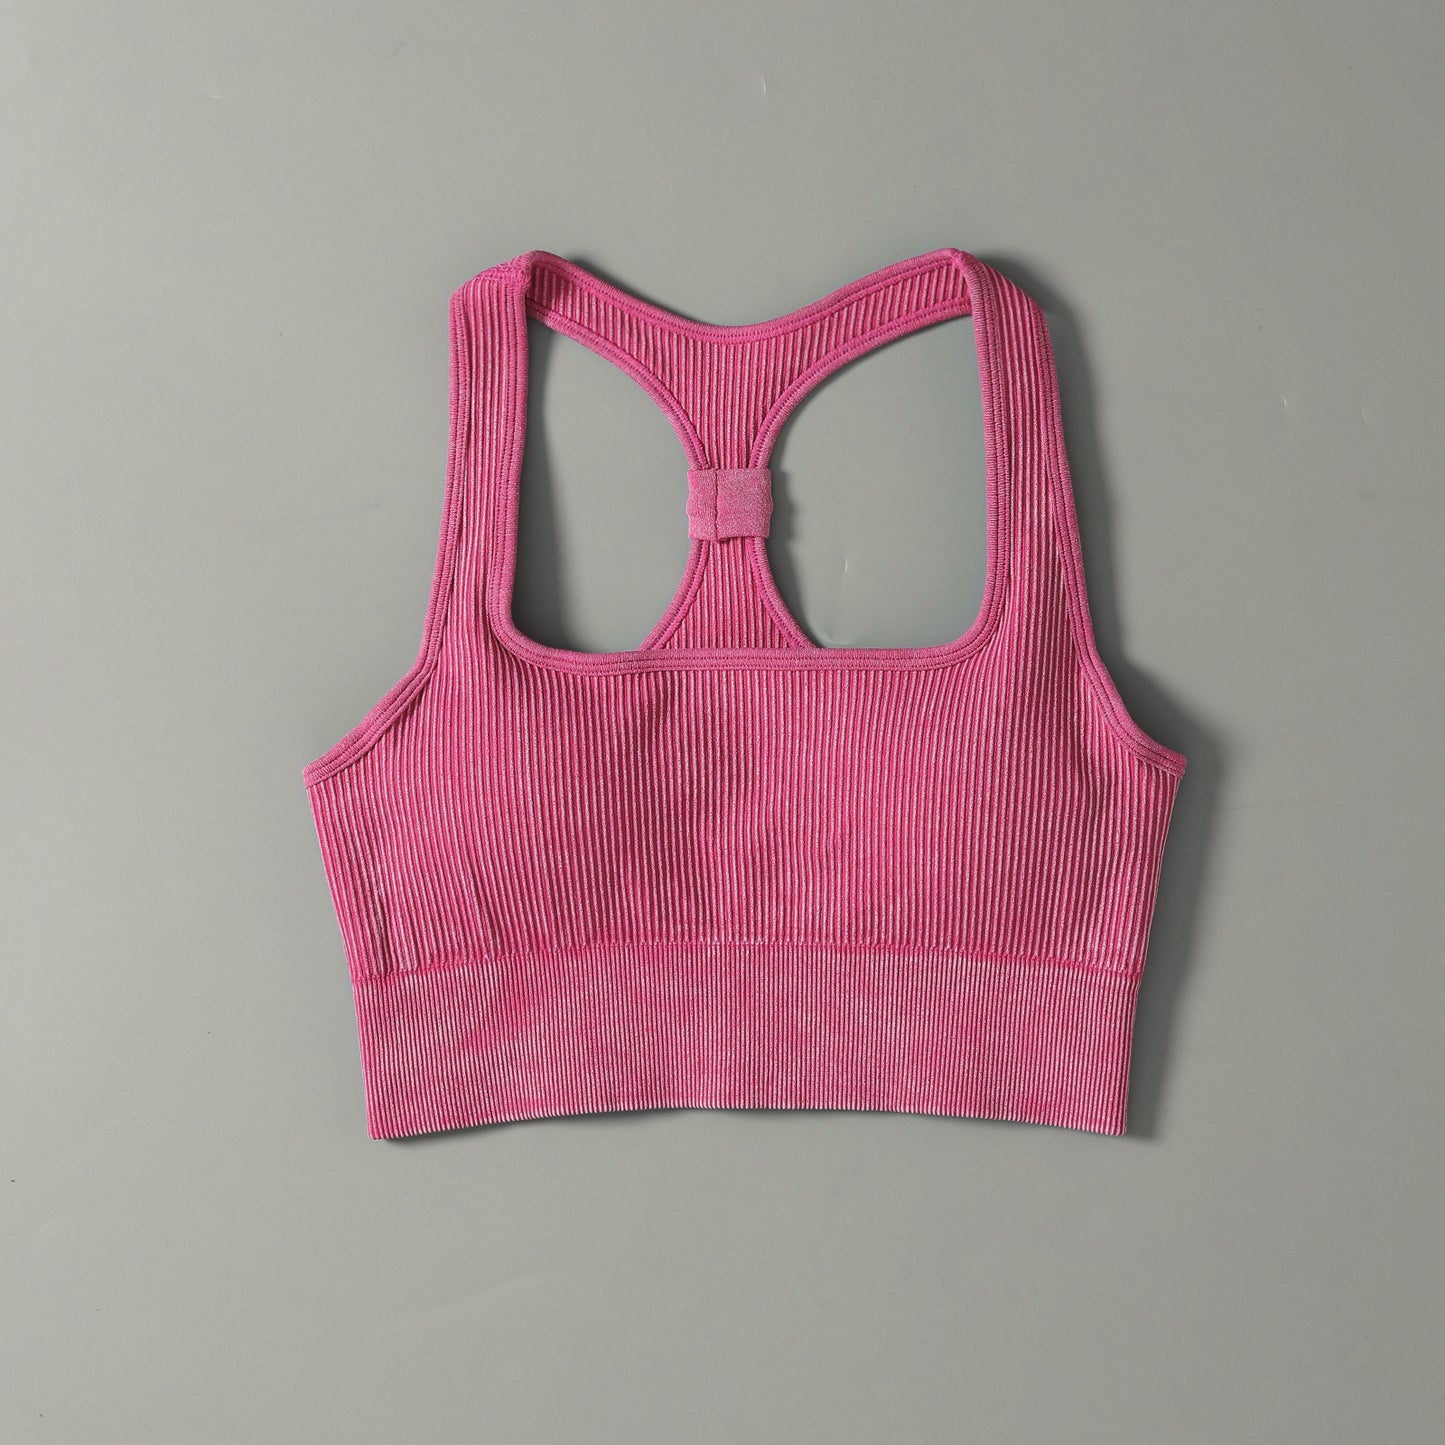 LINK 1 Seamless yoga wear short-sleeved women's sleeveless vest shockproof bra thread sports fitness quick-drying top